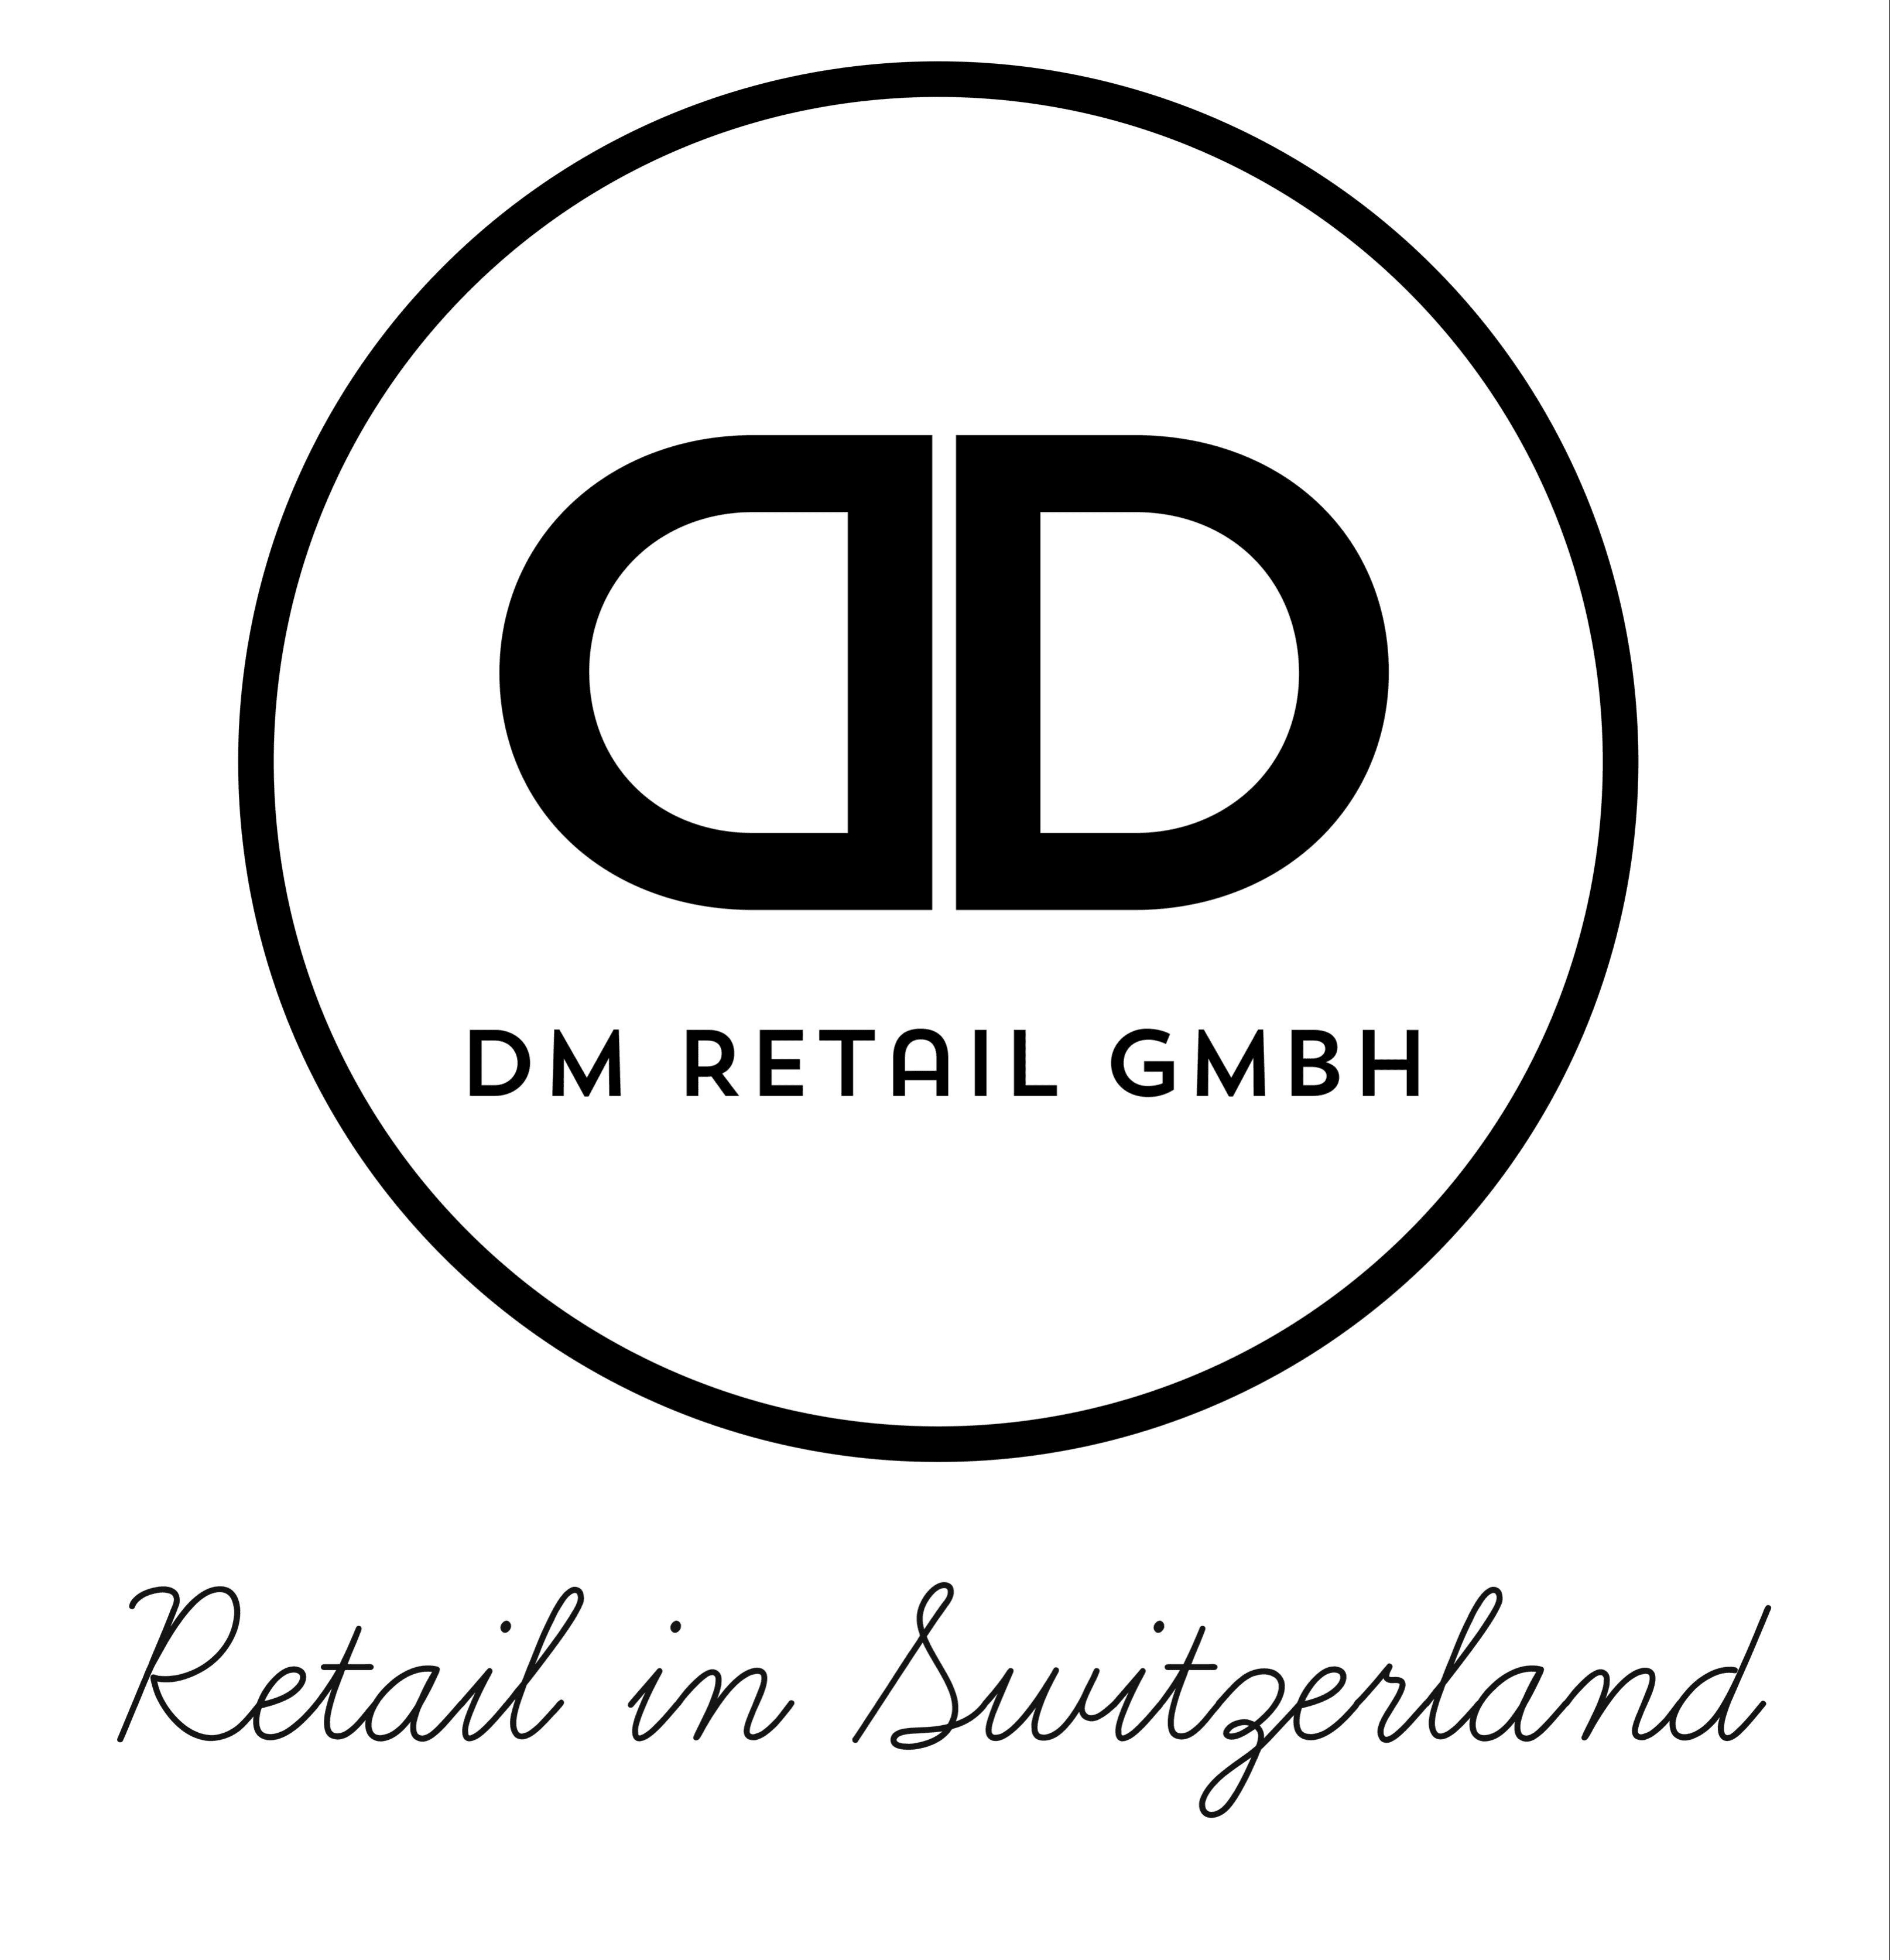 DM Retail GmbH